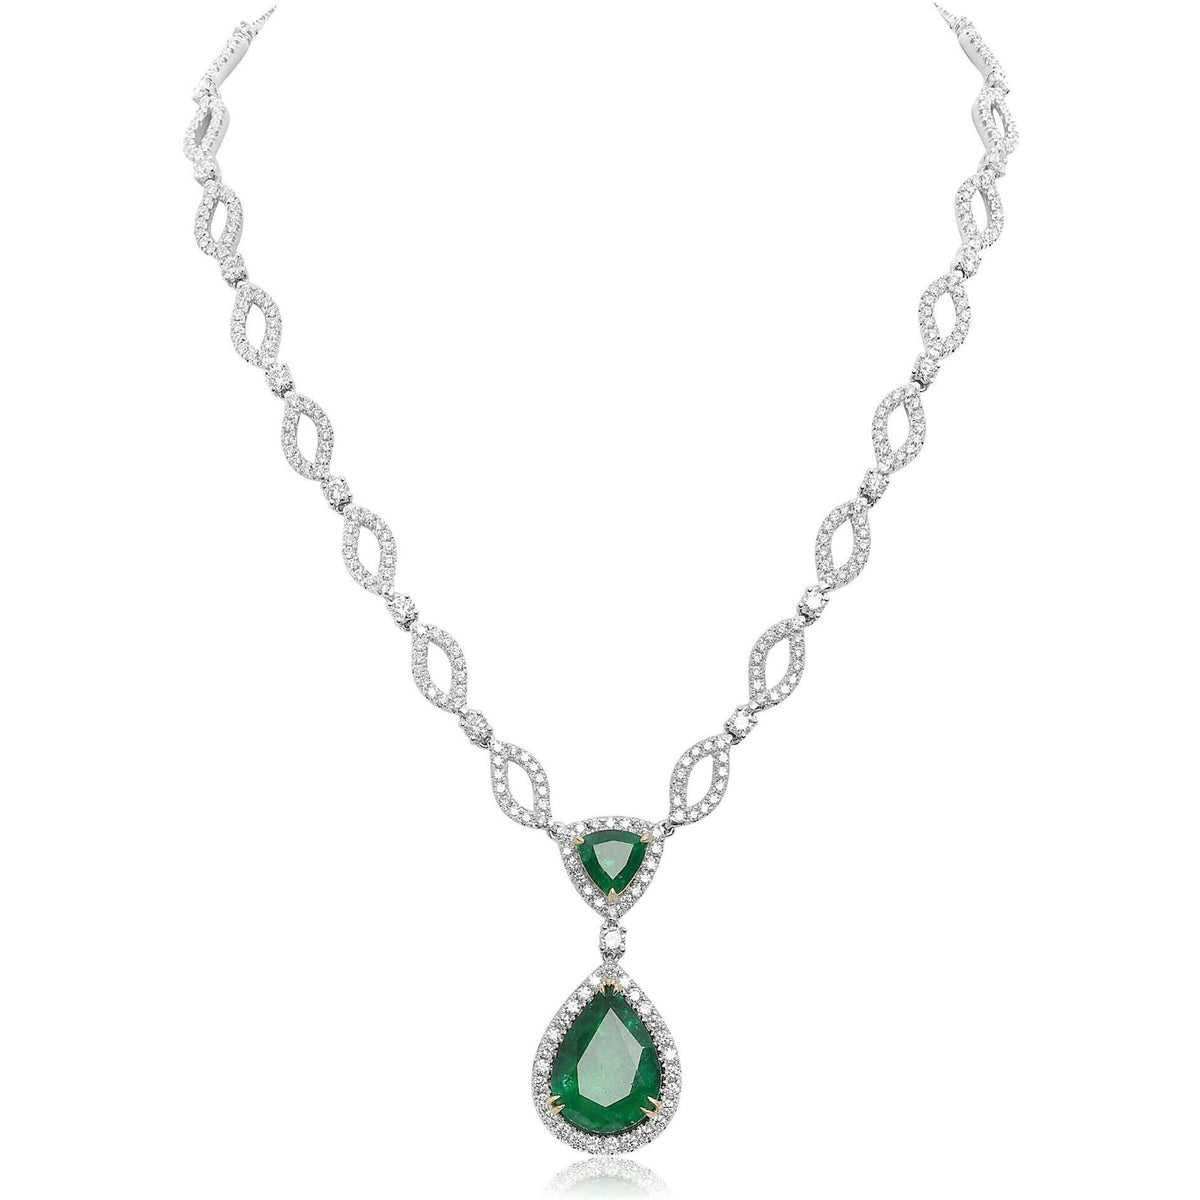 Roman & Jules 18K White Gold Ornate Pear-Shaped Emerald Necklace - 14.54 Carat Emeralds, 10.35 Carat Diamonds